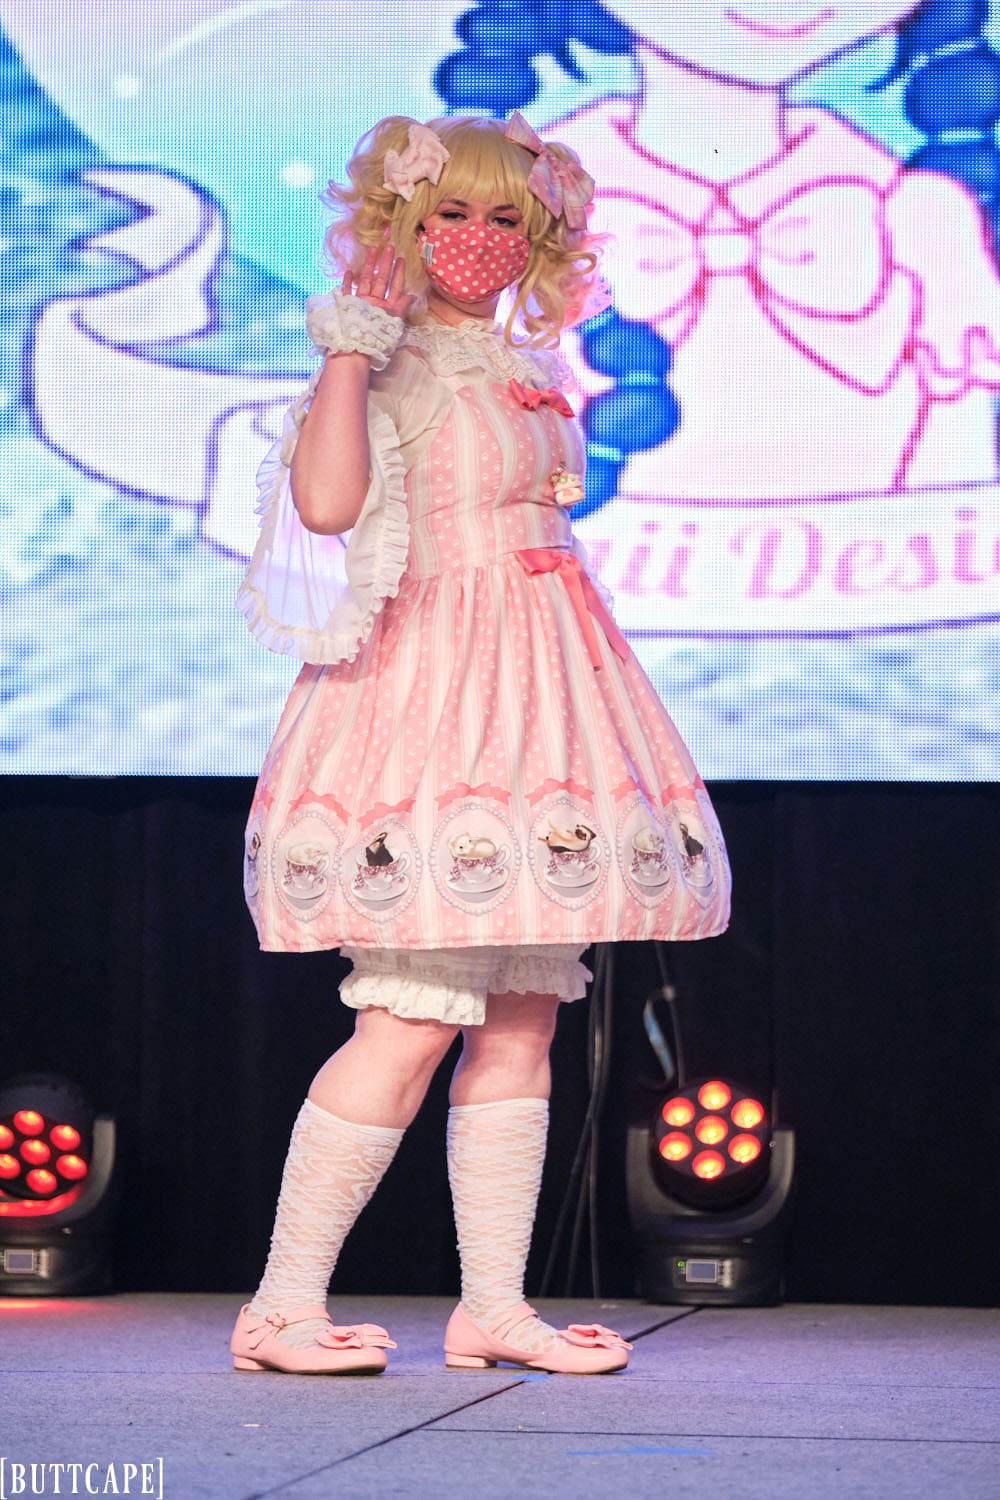 Kittykaya model 4 wearing pink lolita dress with tea cup theme and polka dot fabric - full body 2.